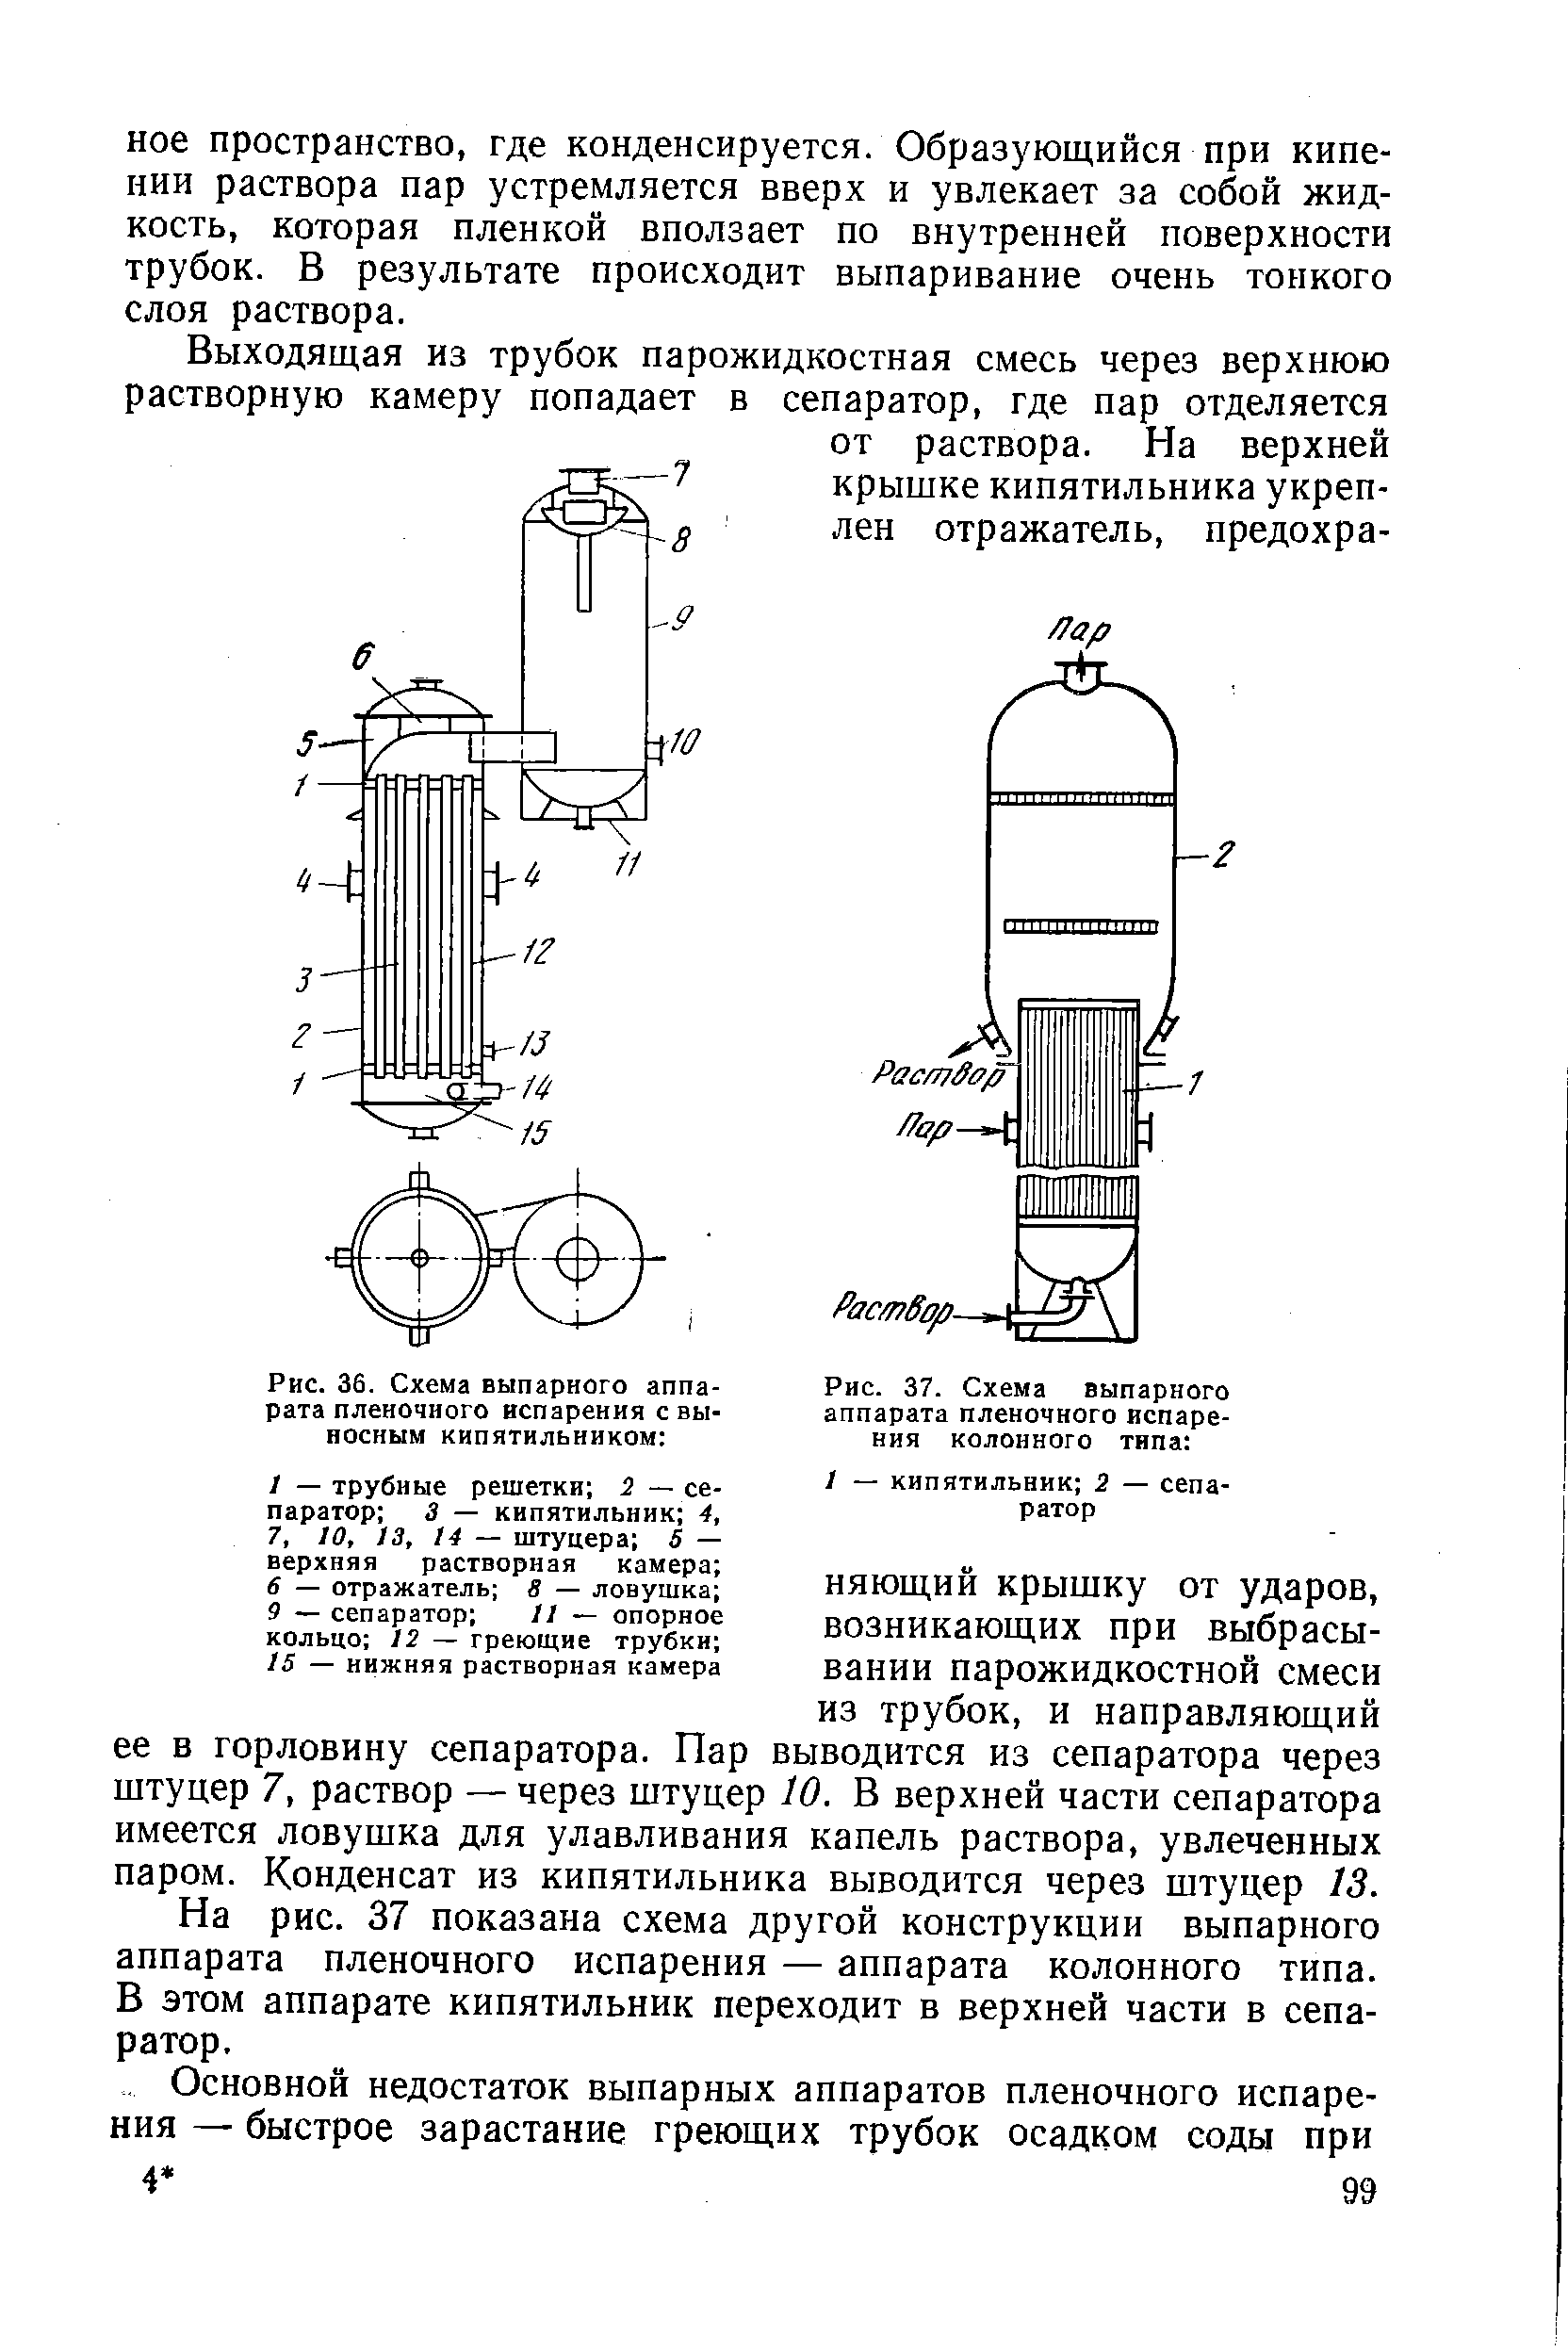 Рис. 37. Схема выпарного аппарата пленочного испарения колонного типа 
